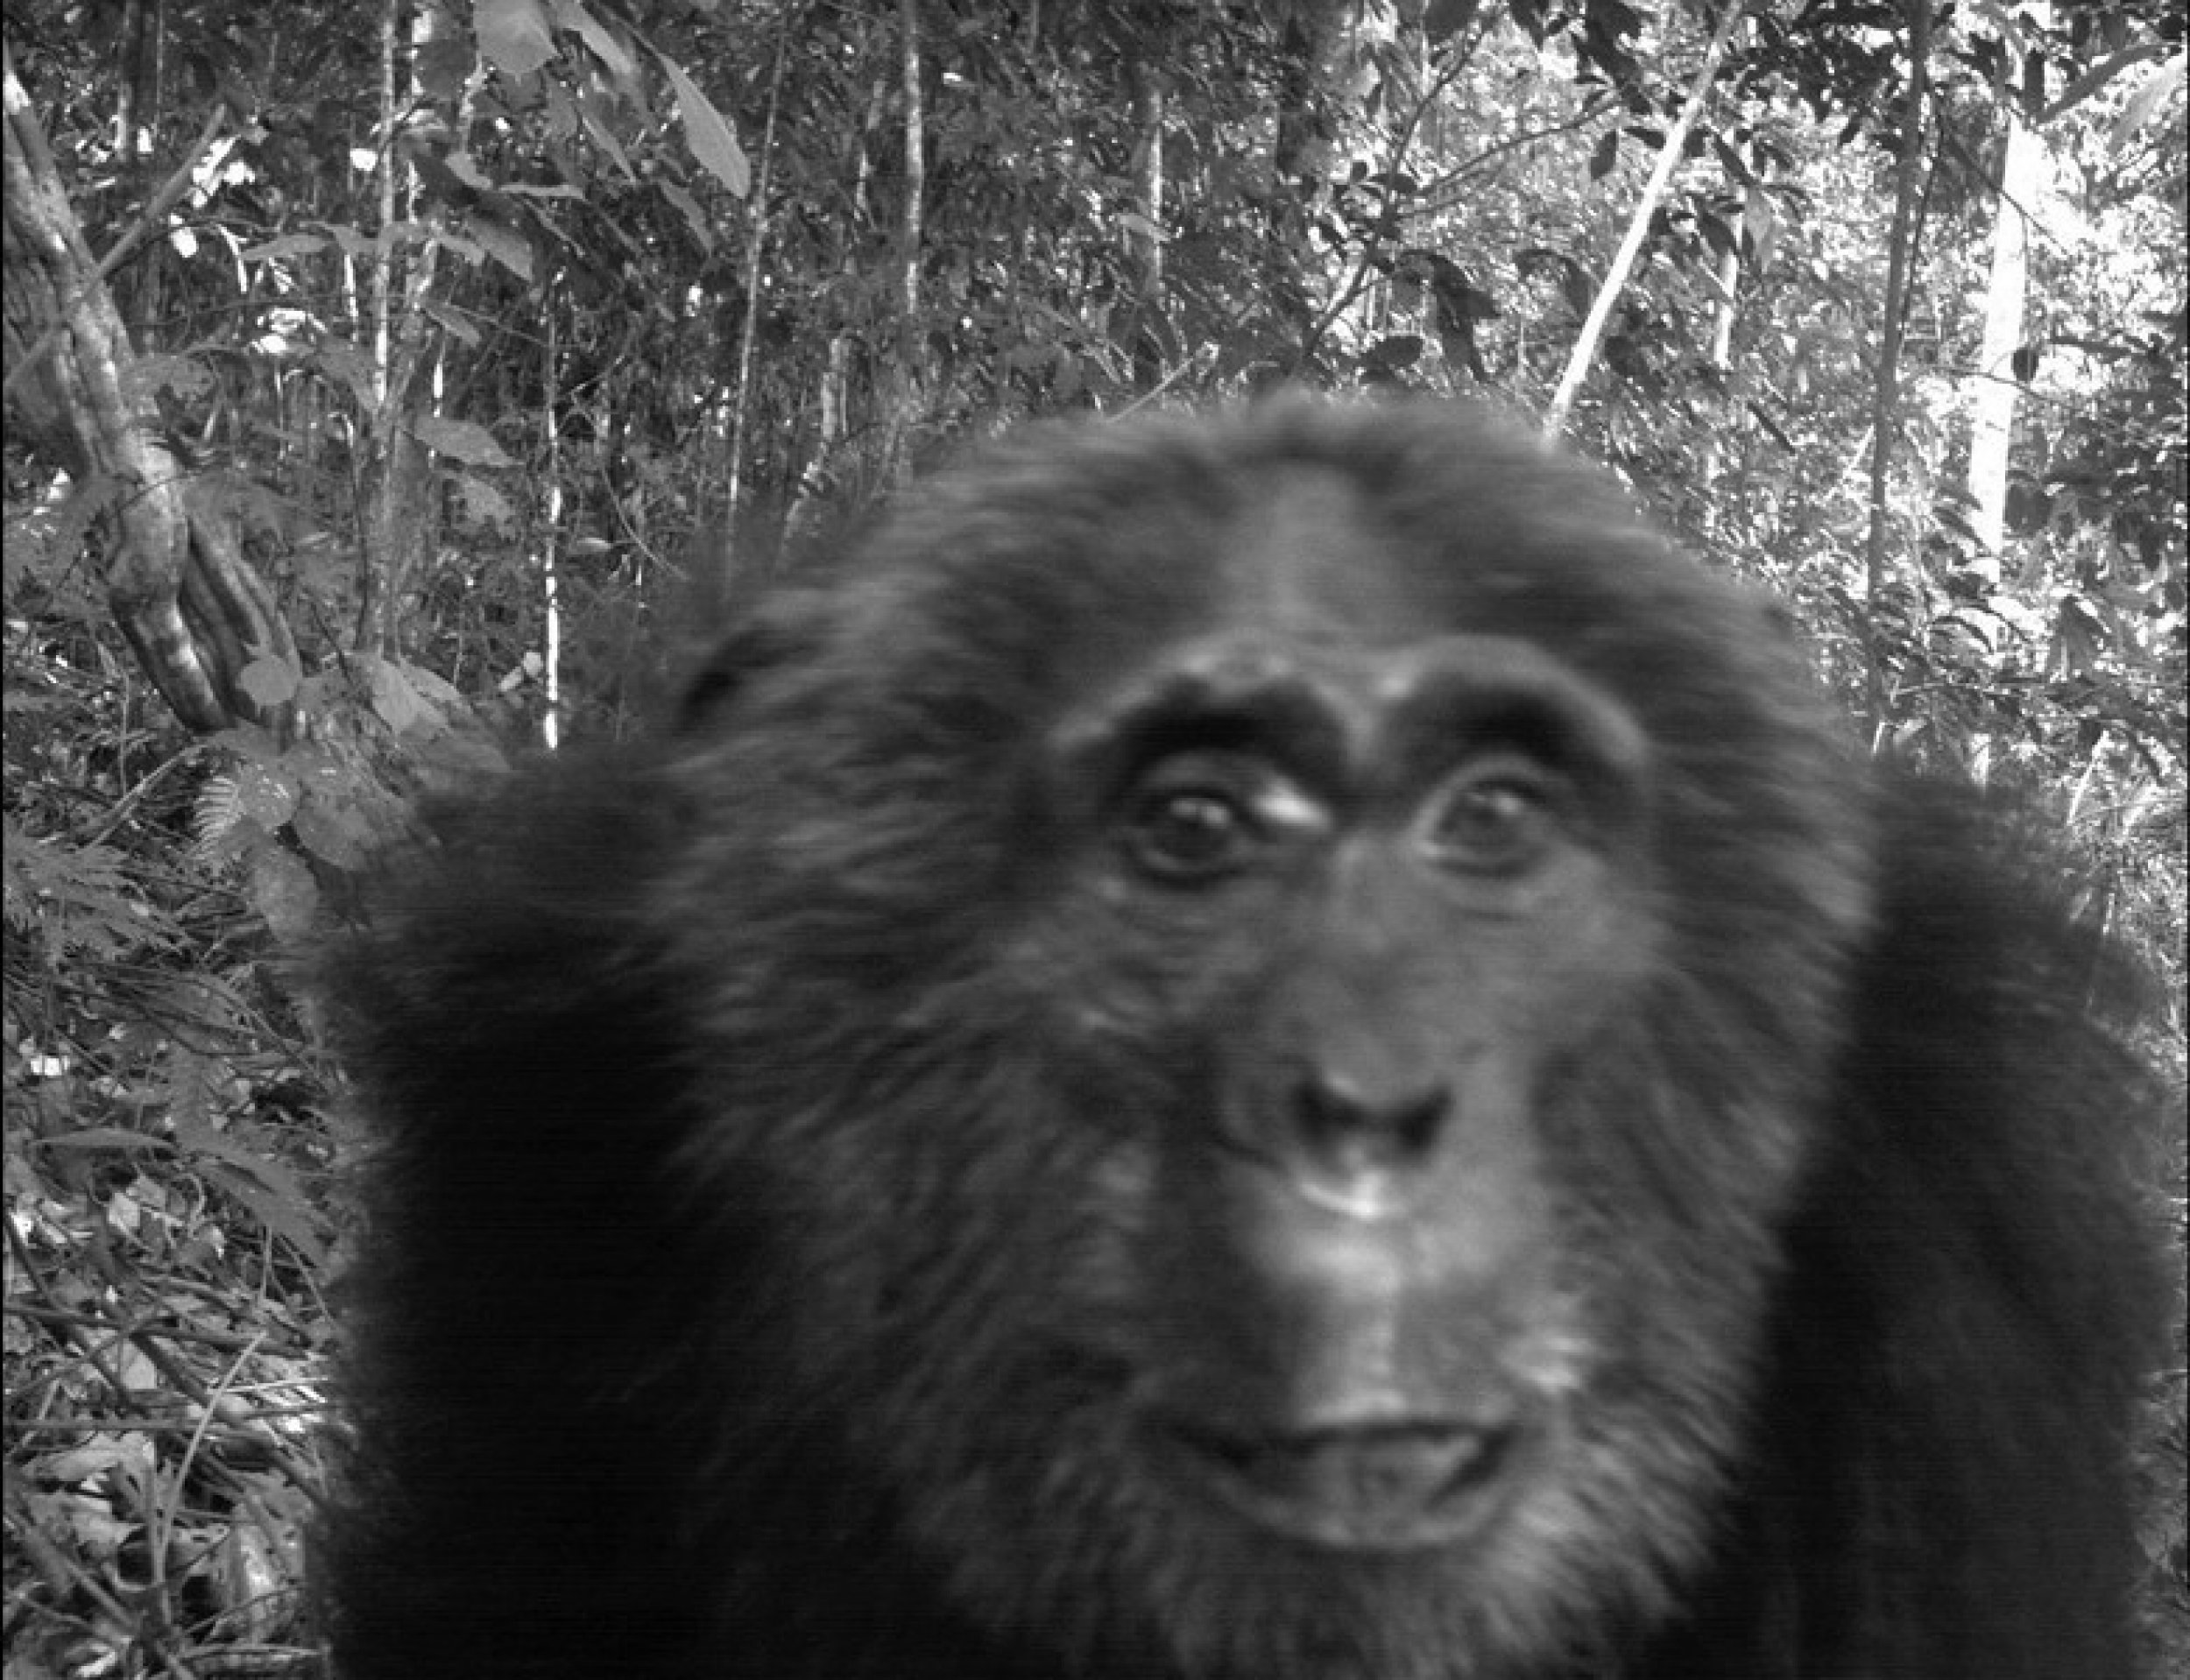 Pan troglodytes Common chimpanzee, an endangered species.